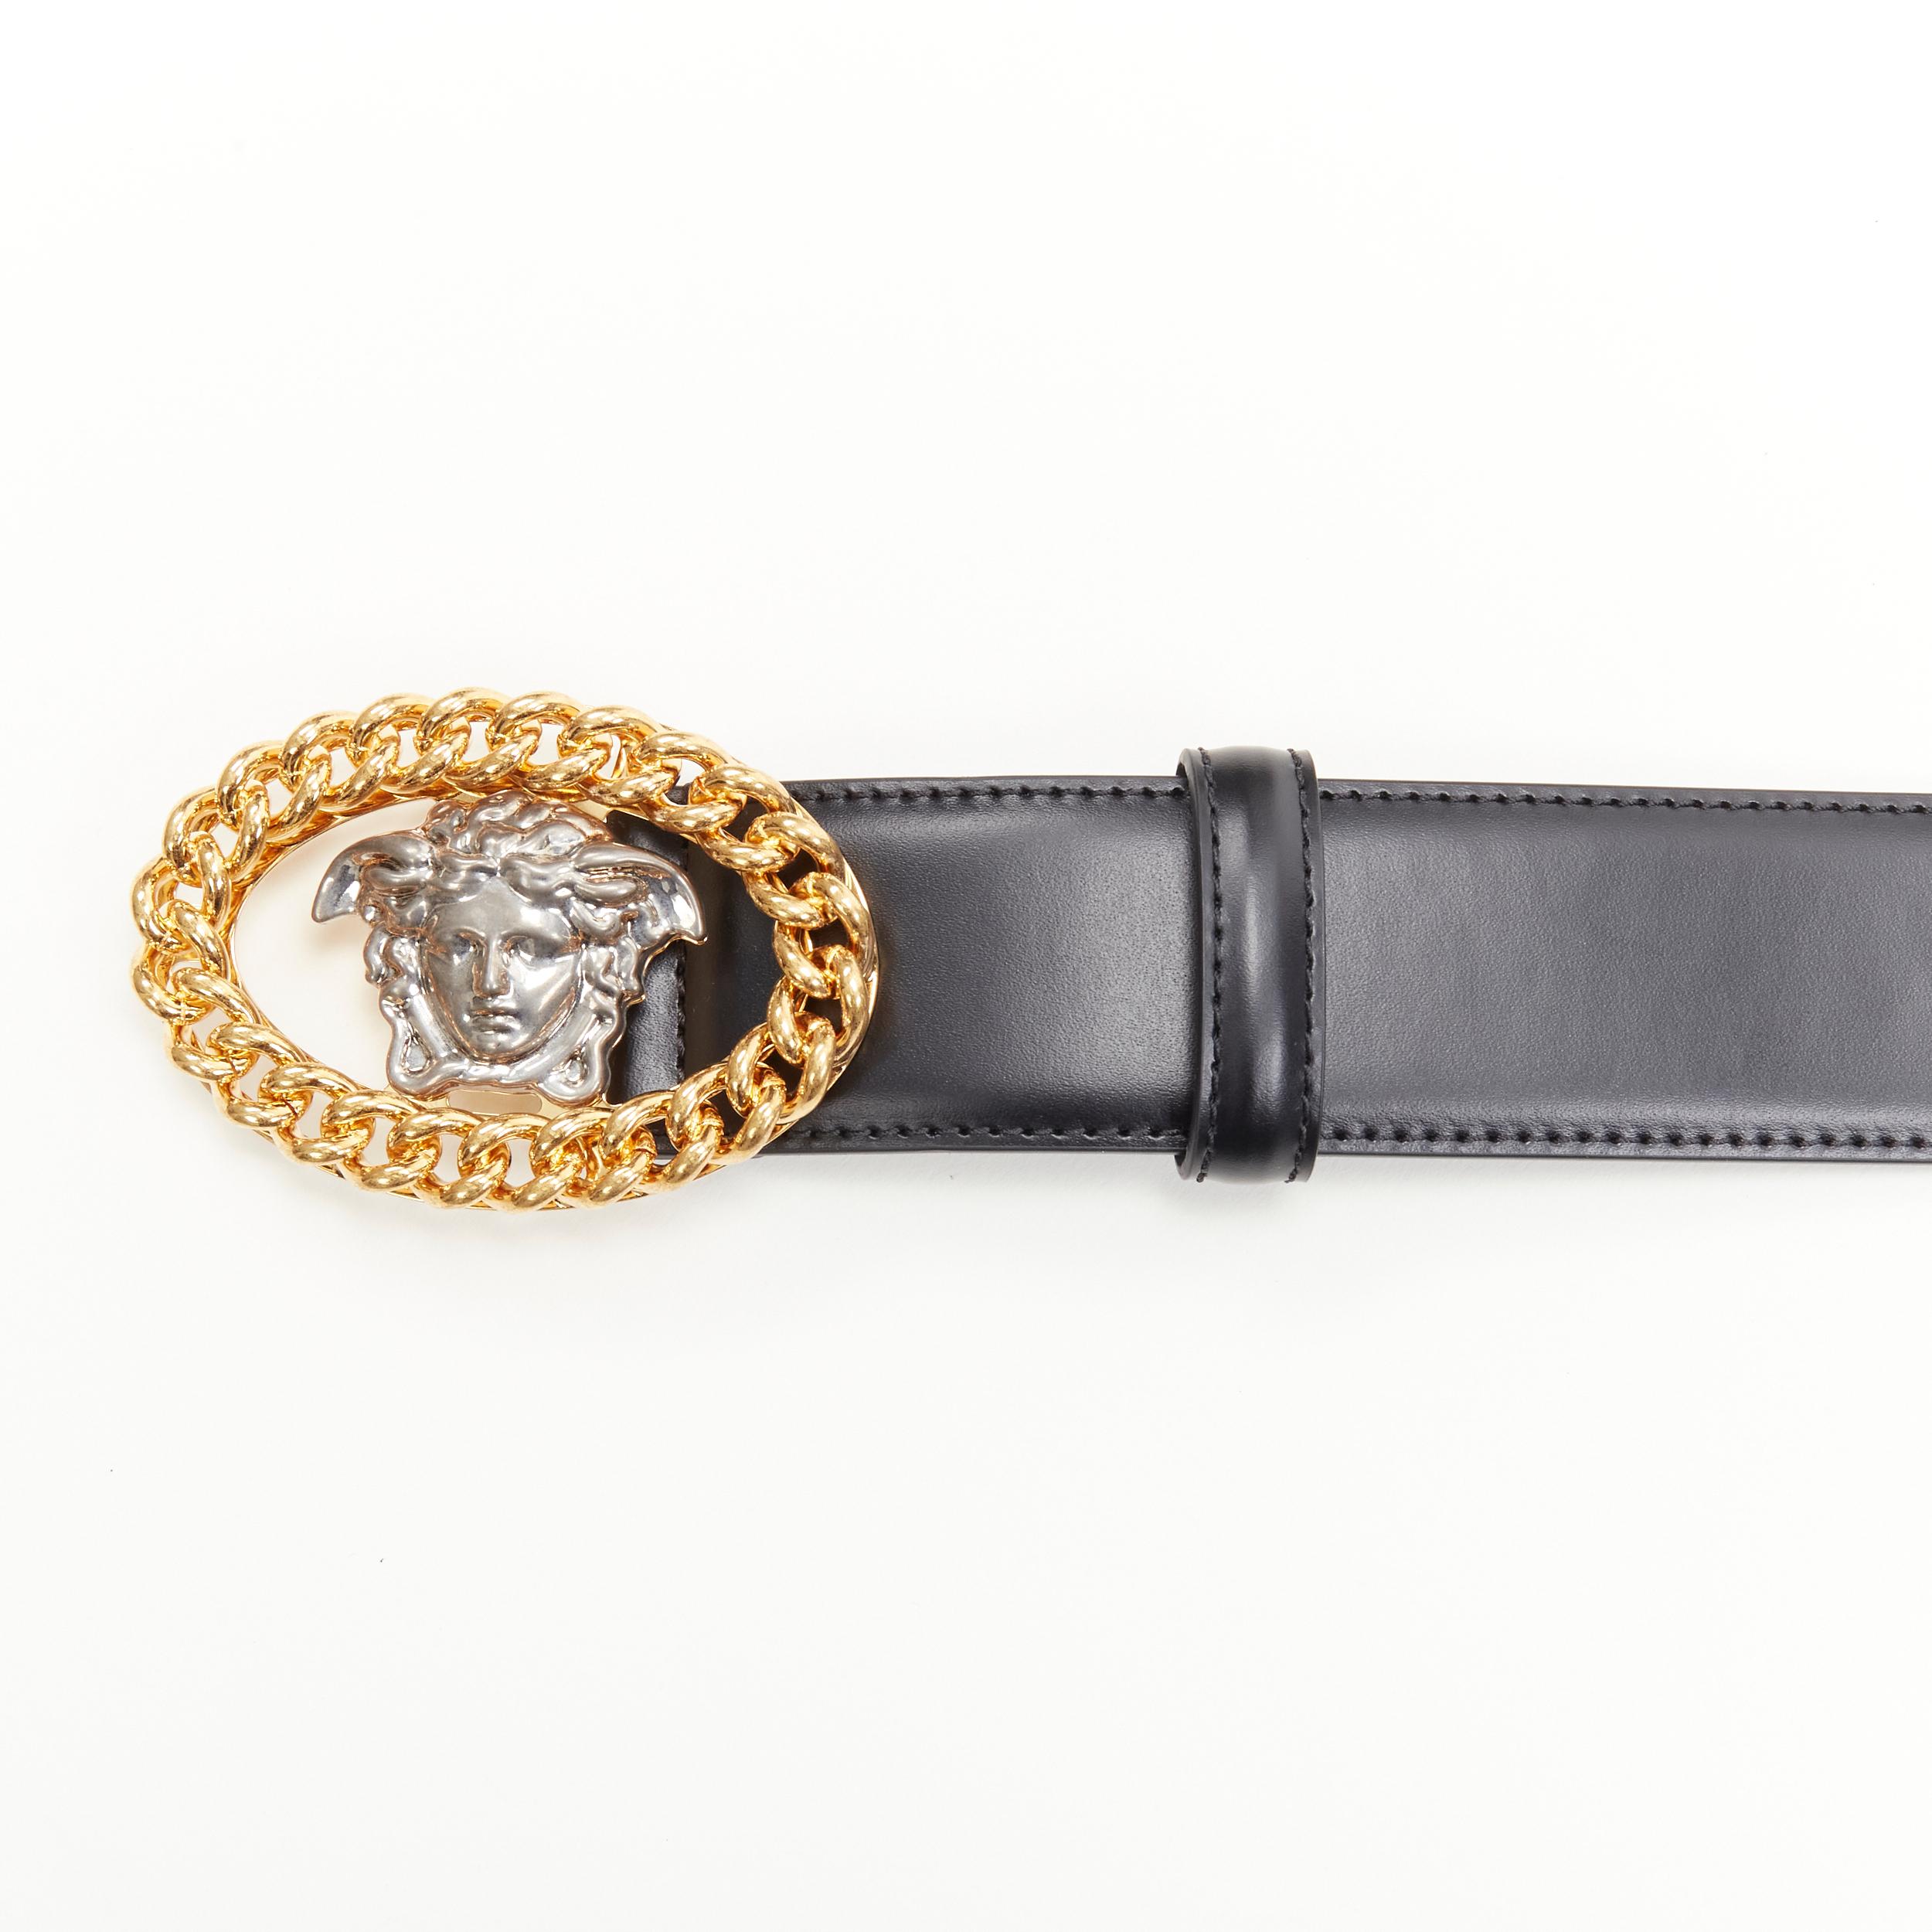 Black new VERSACE La Medusa Insignia silver gold chain buckle black belt 110cm 44